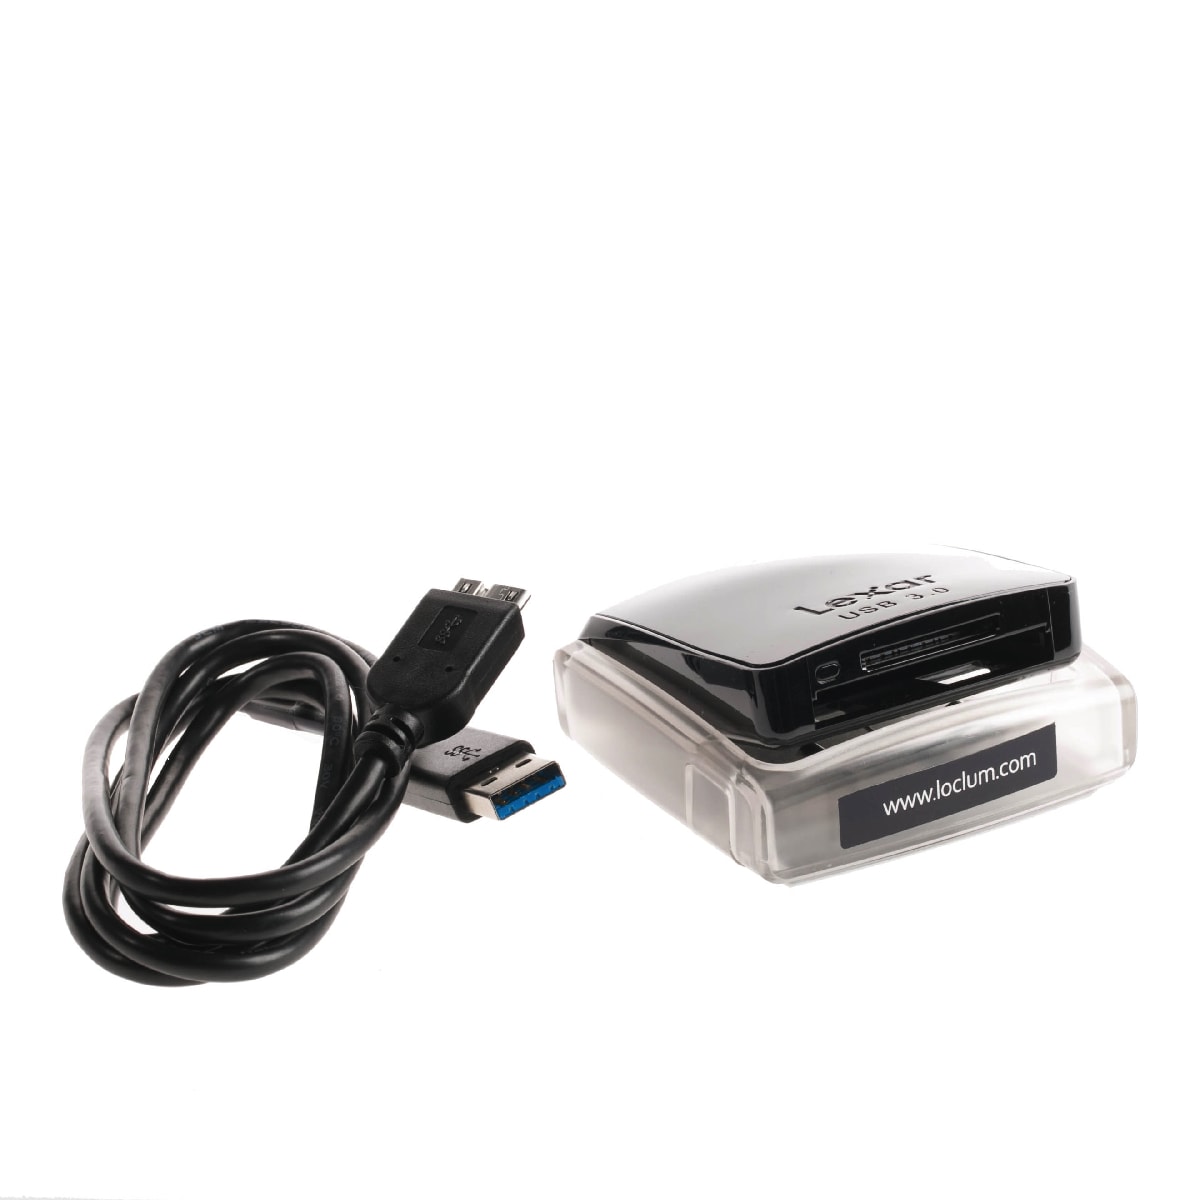 Lexar Card Reader, CF and SD, USB 3.0